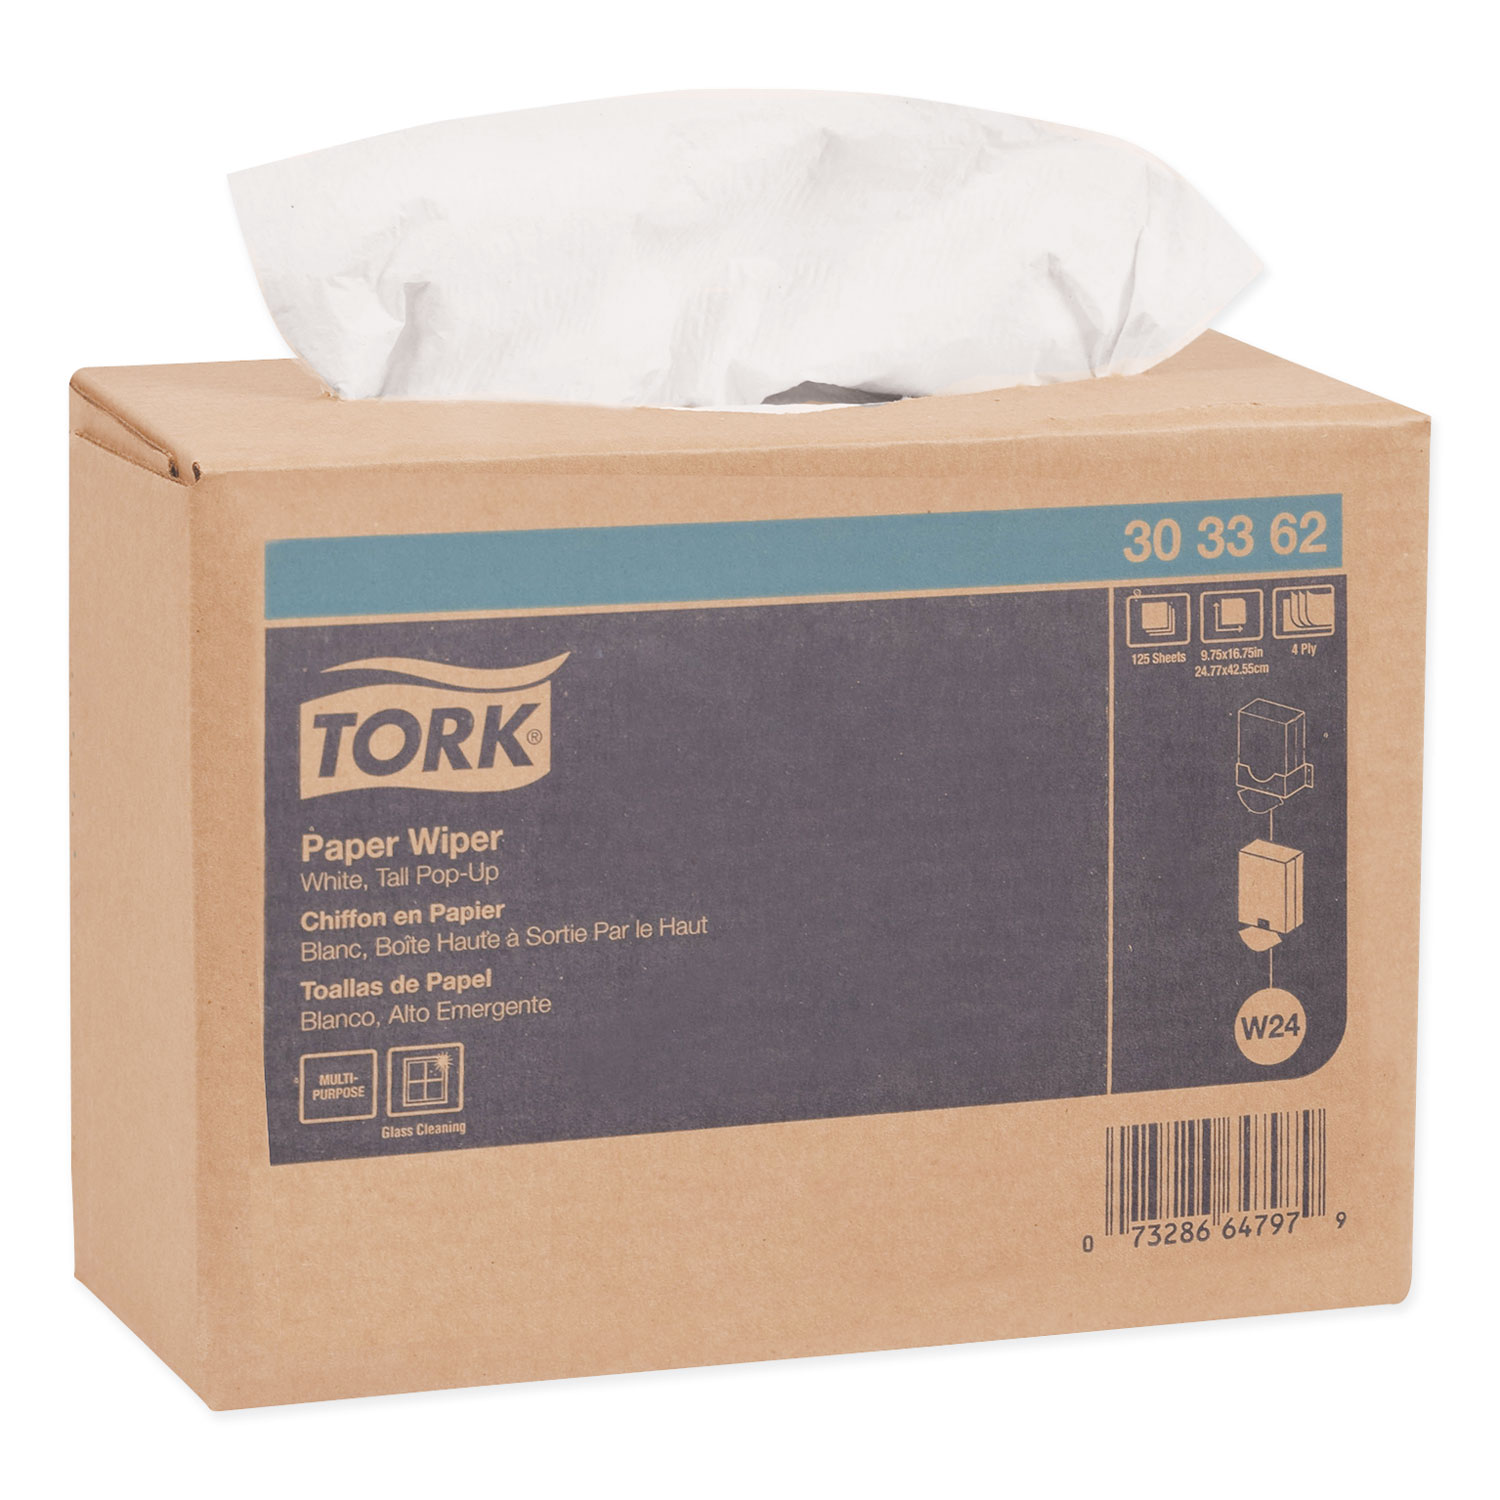  Tork 303362 Multipurpose Paper Wiper, 9.75 x 16.75, White, 125/Box, 8 Boxes/Carton (TRK303362) 